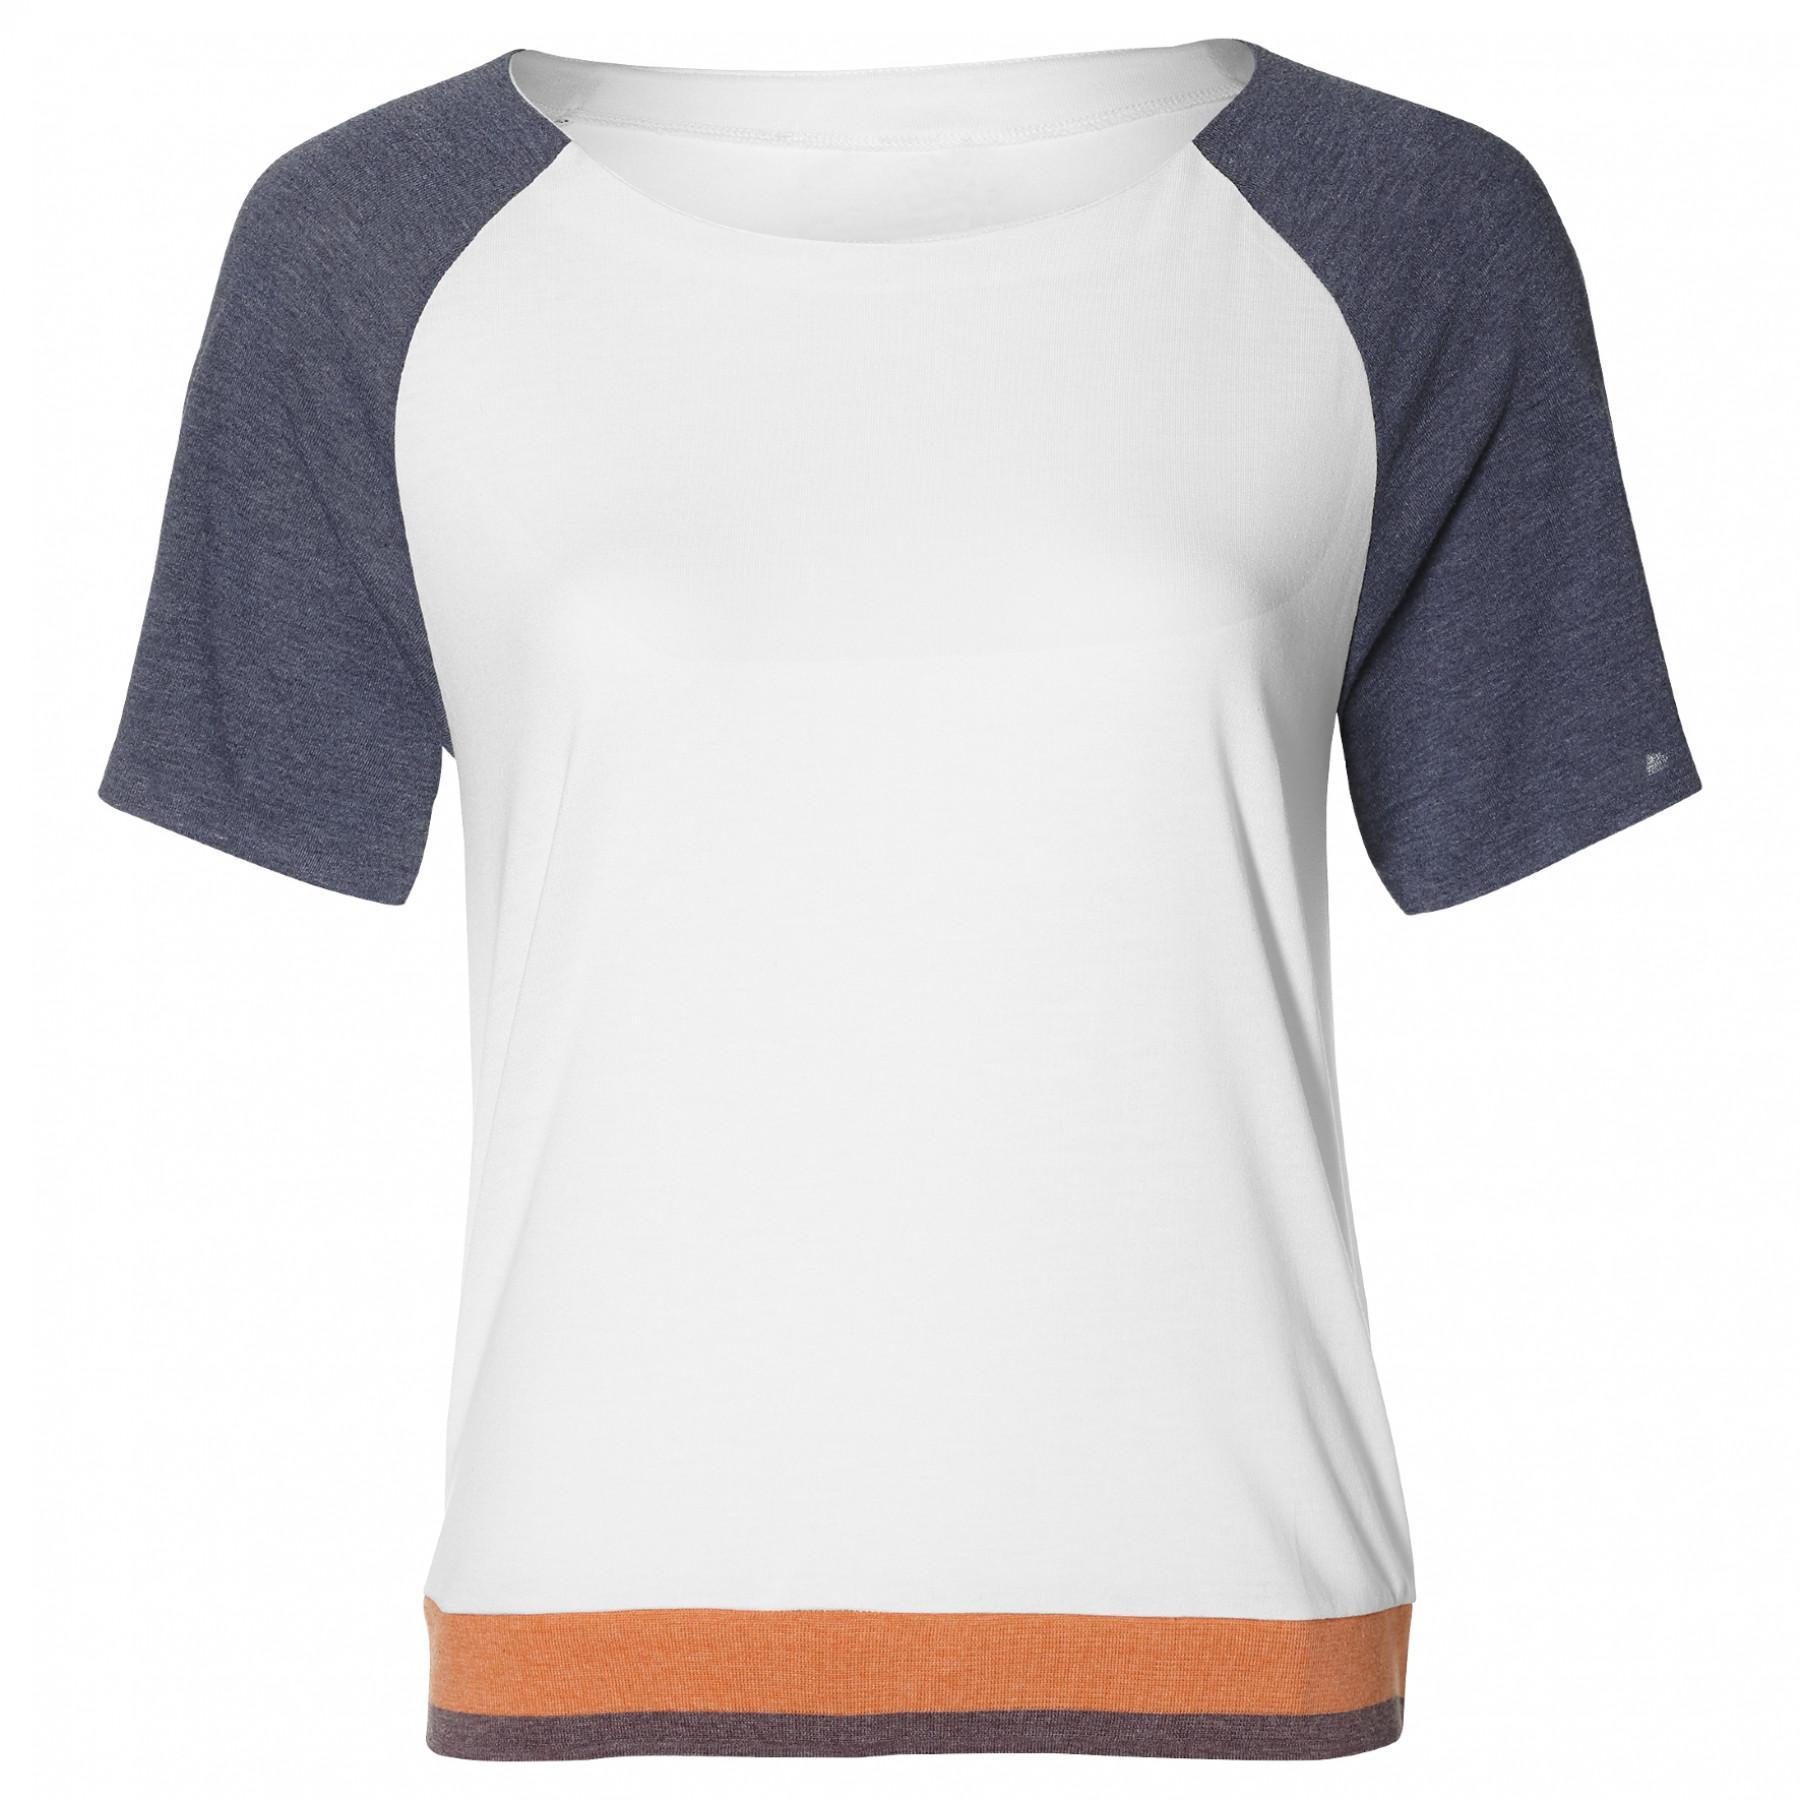 Camiseta feminina Asics Gel Cool 2 Top